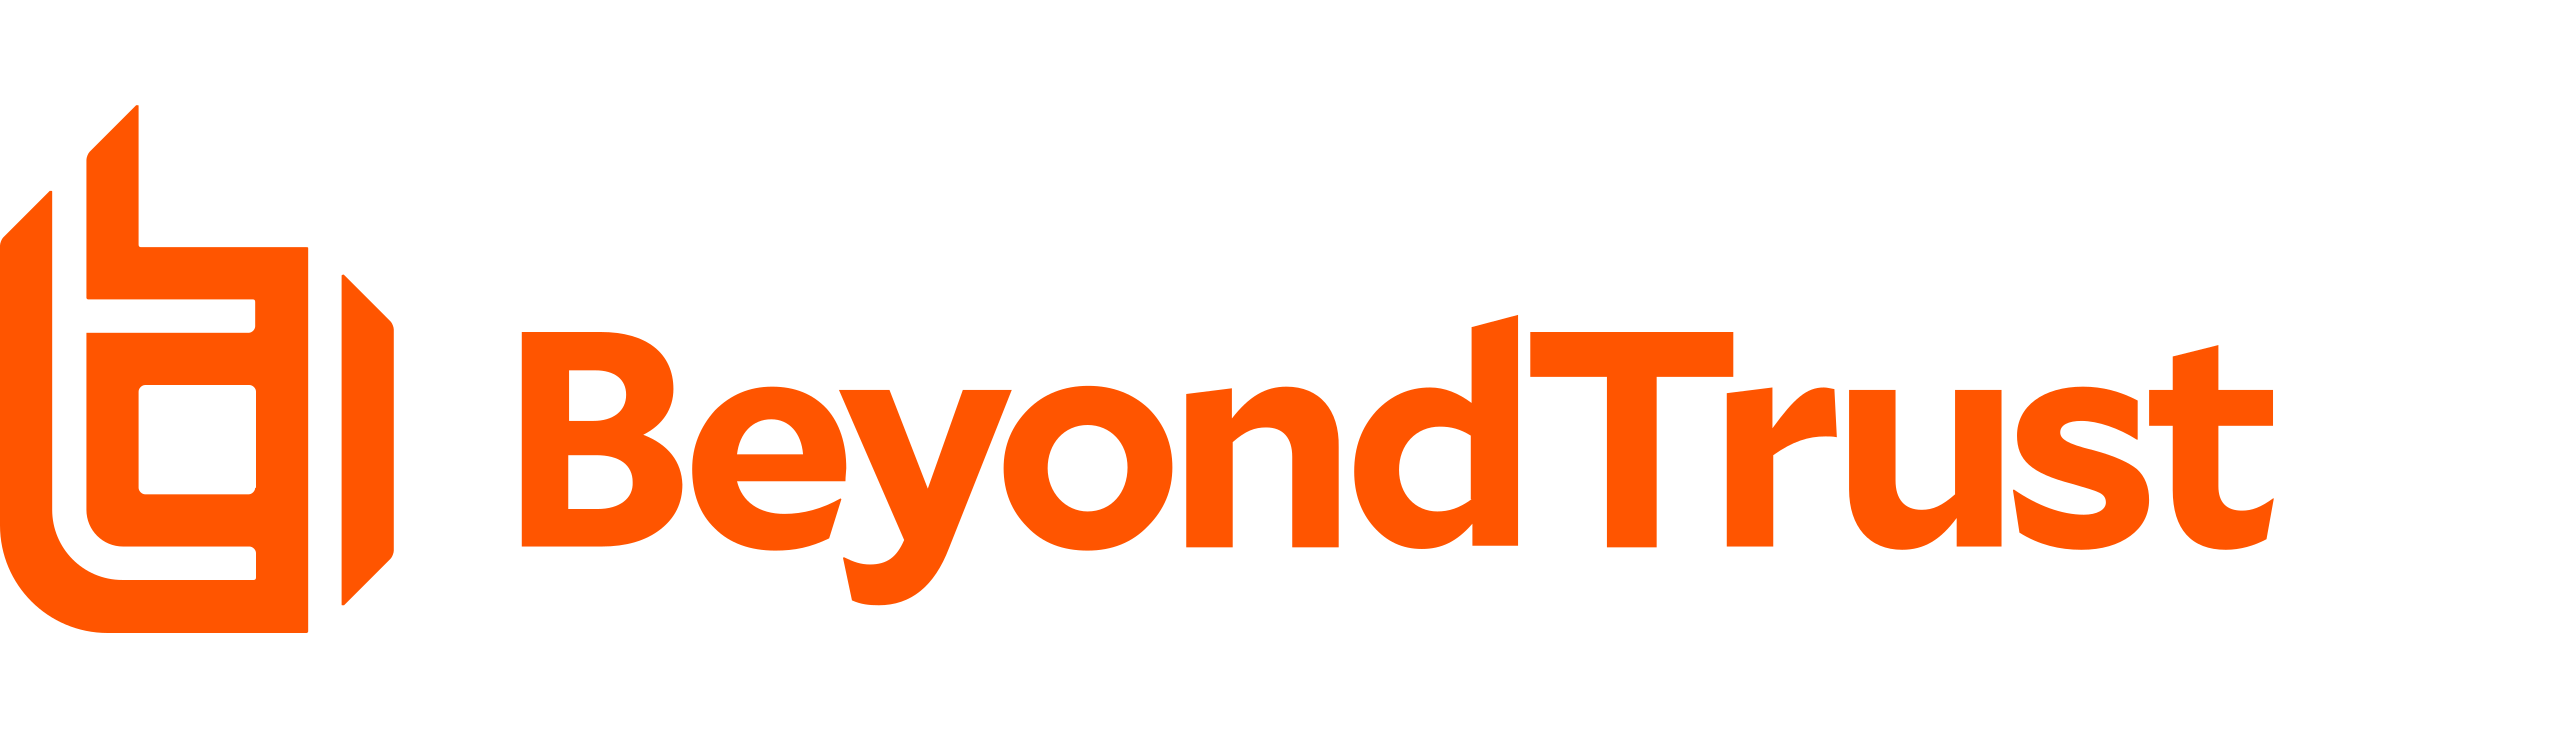 BeyondTrust_logo.svg (1)